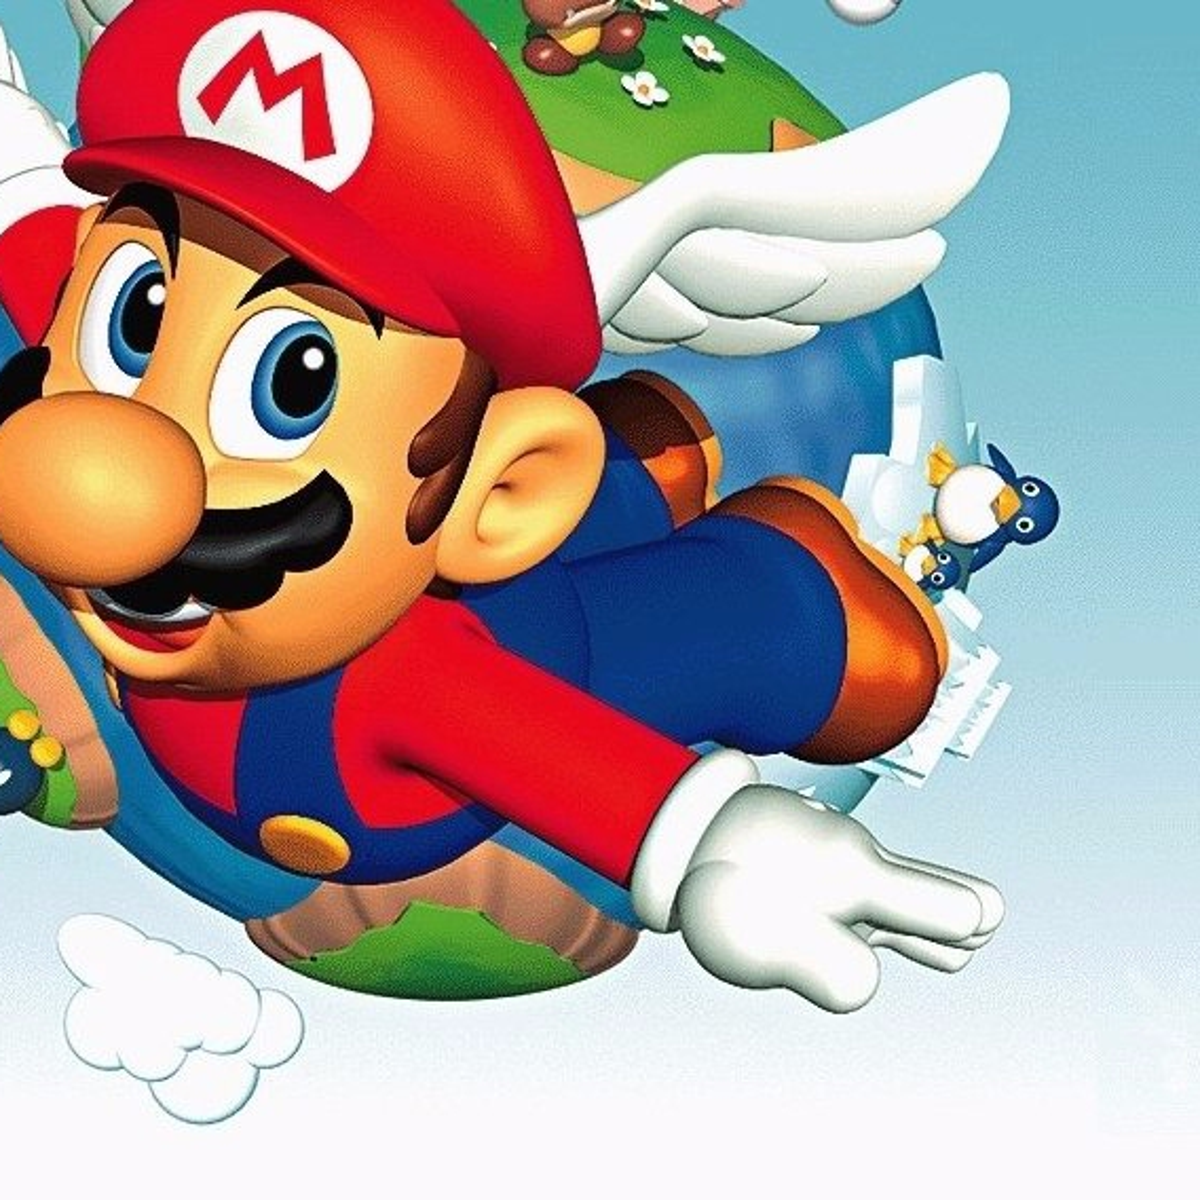 Super Mario 64's best world is actually Peach's Castle